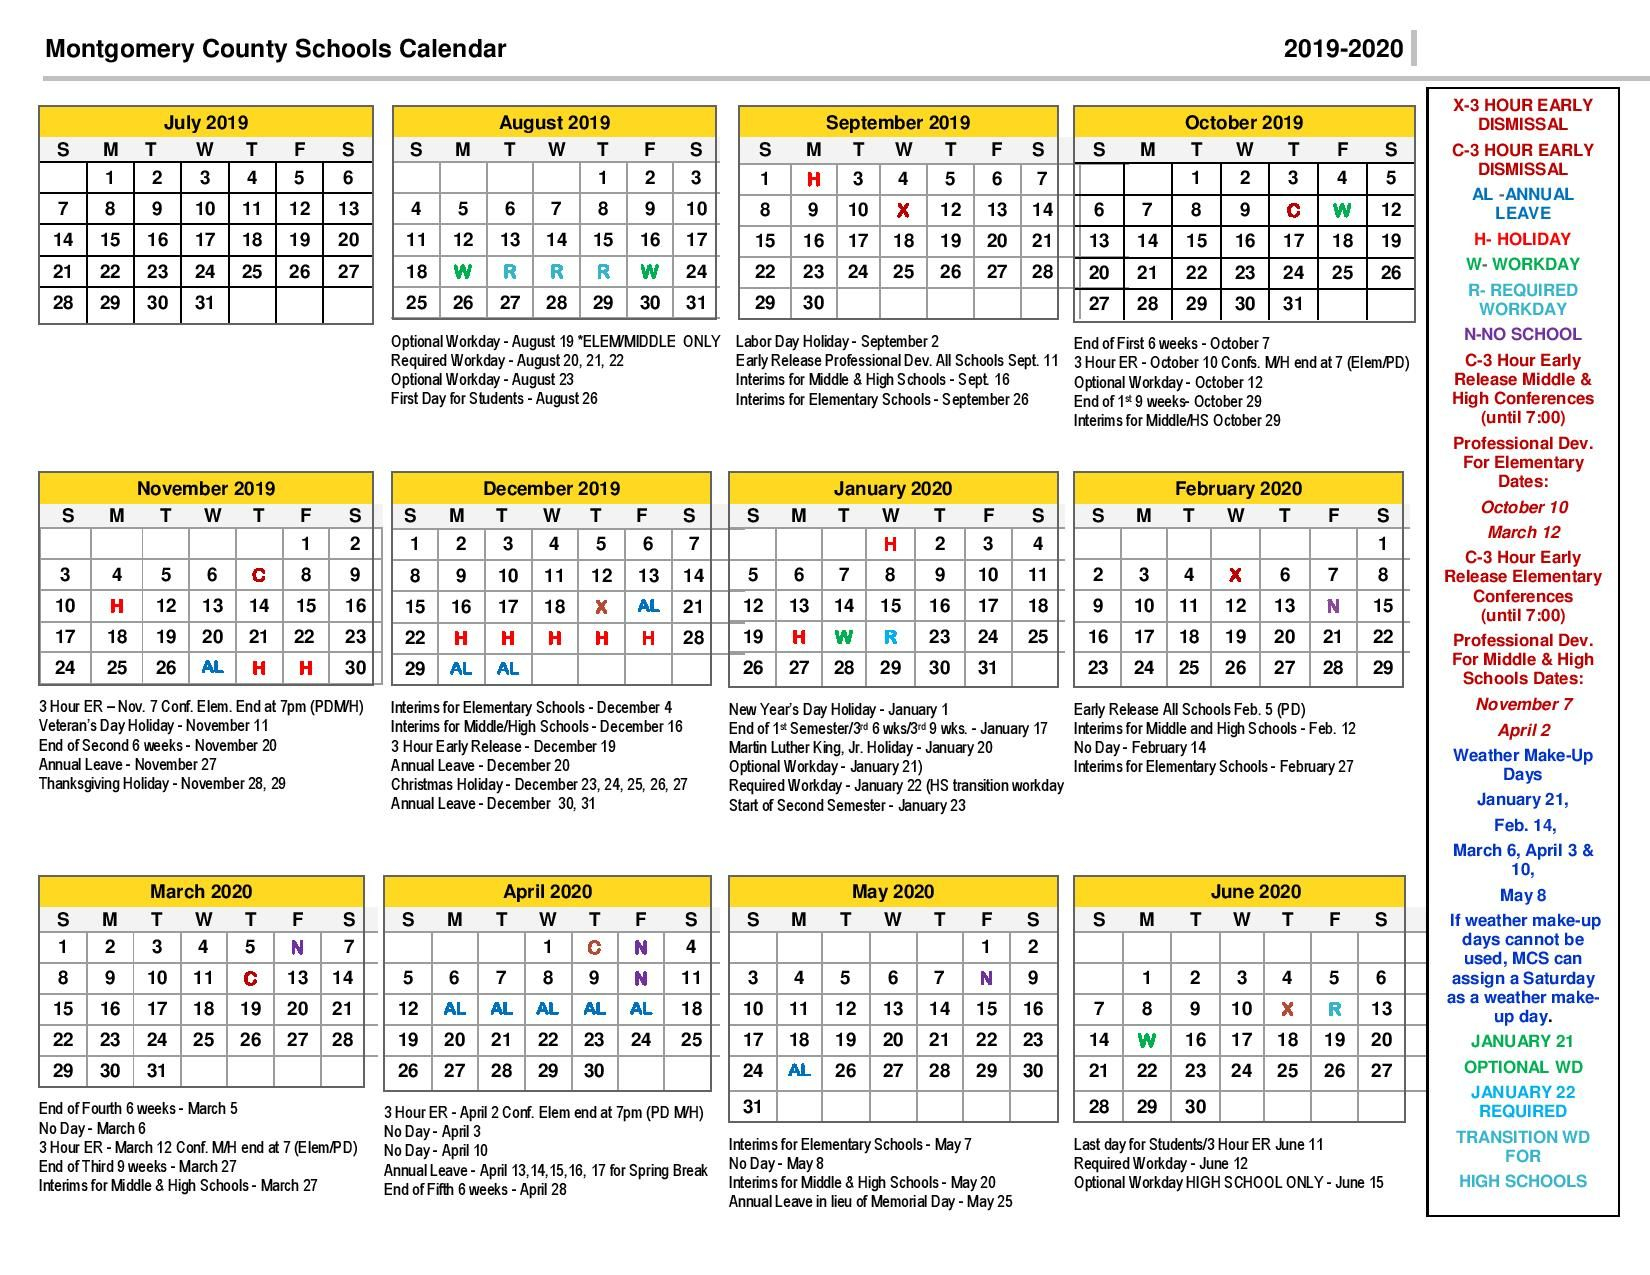 Montgomery County School Calendar With Holidays Https www